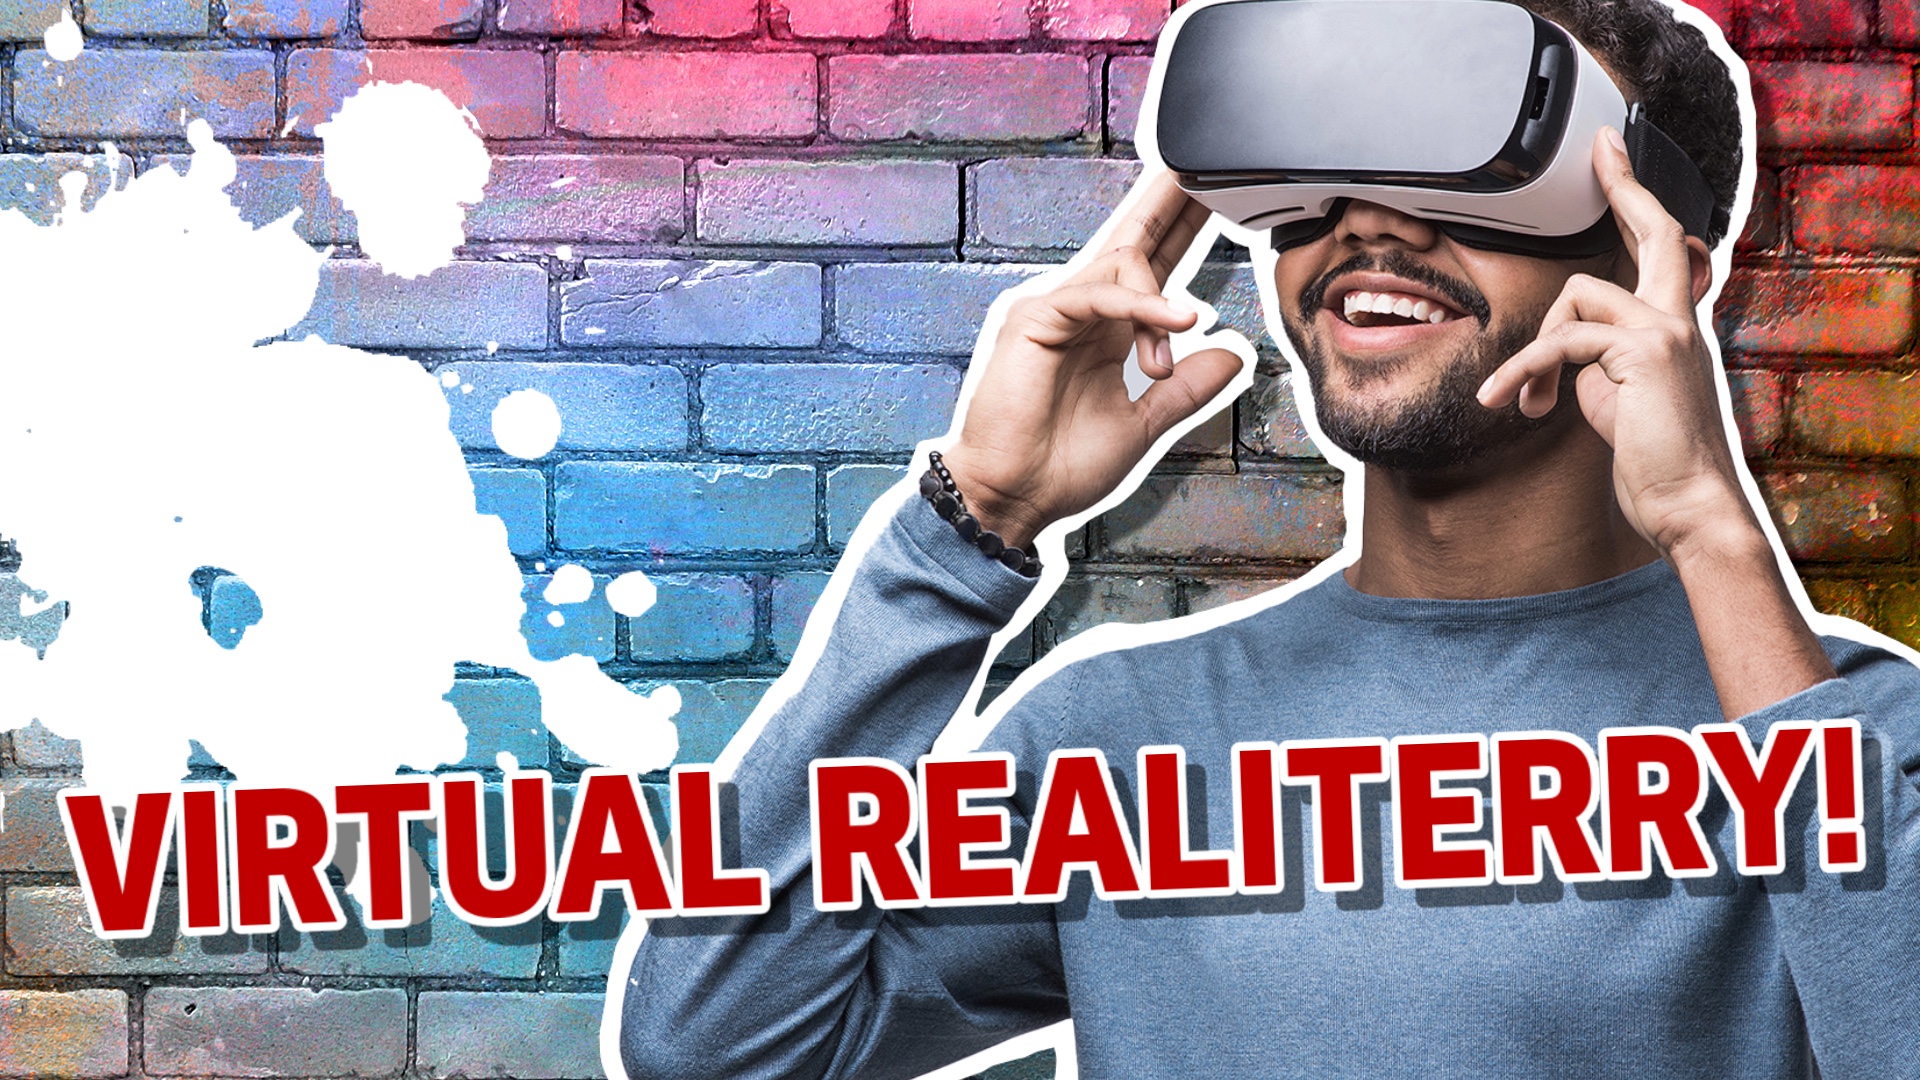 Result: Virtual Realiterry